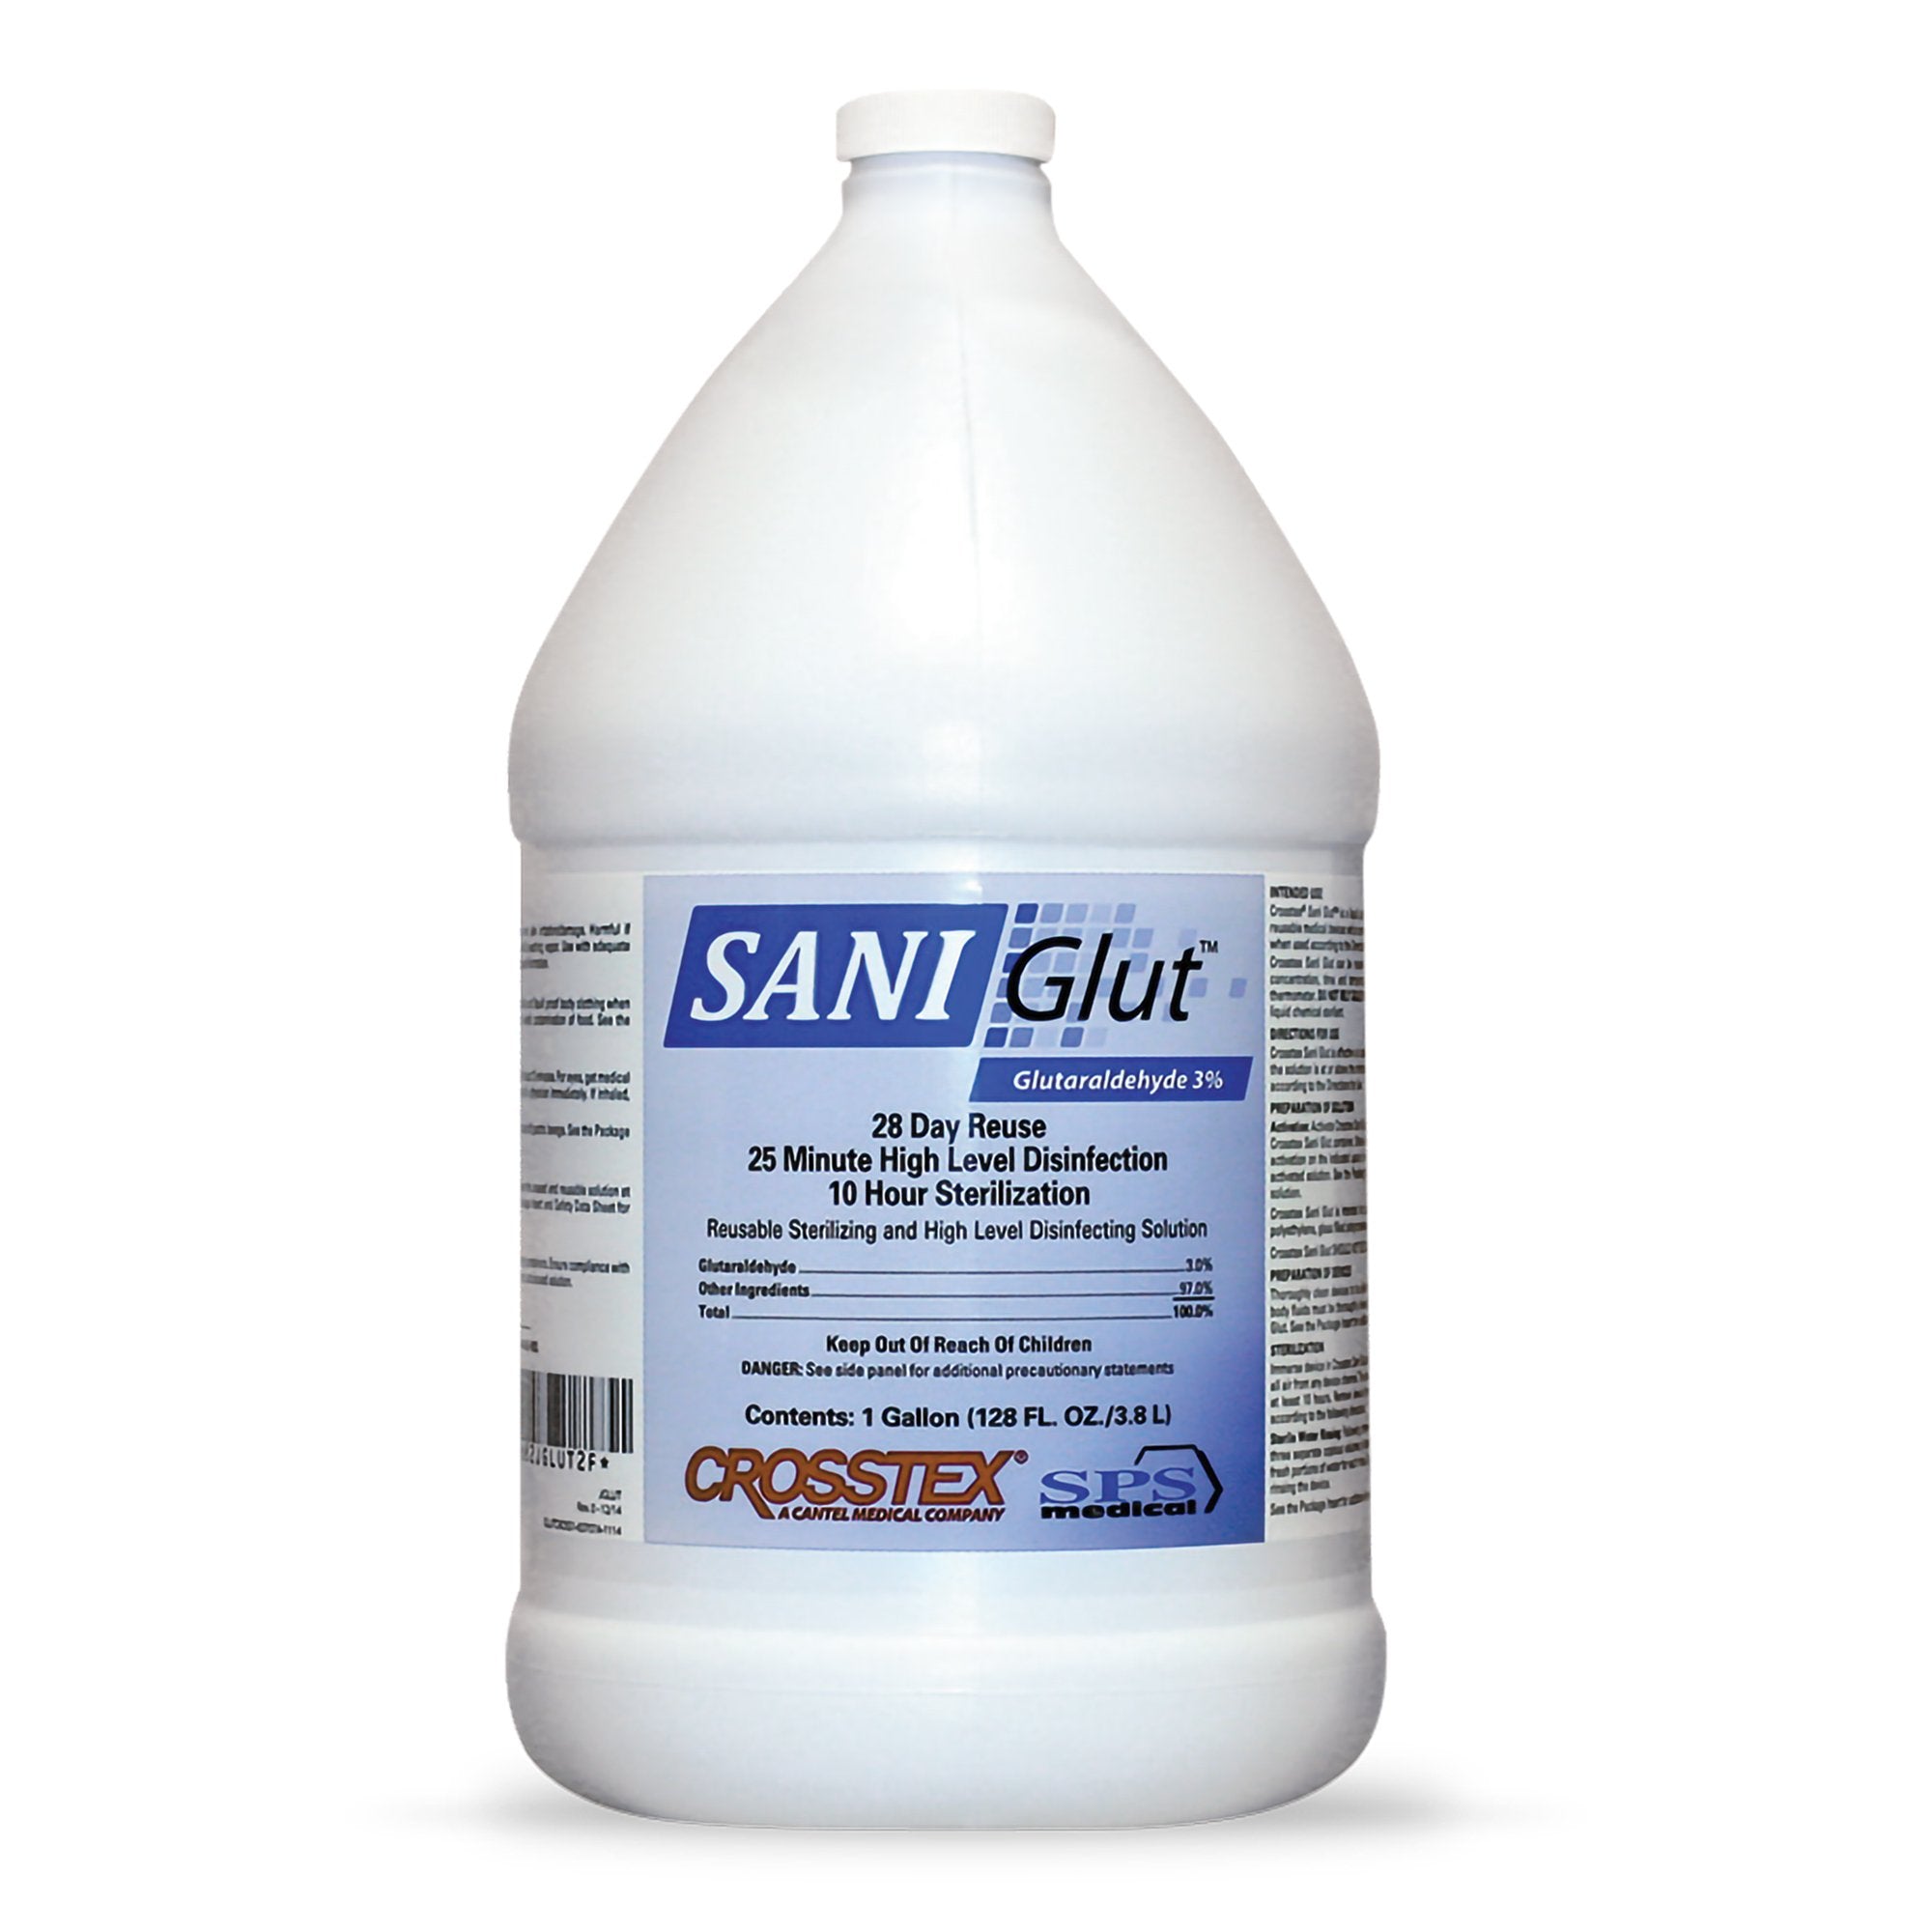 SANI Glut? Glutaraldehyde High Level Disinfectant